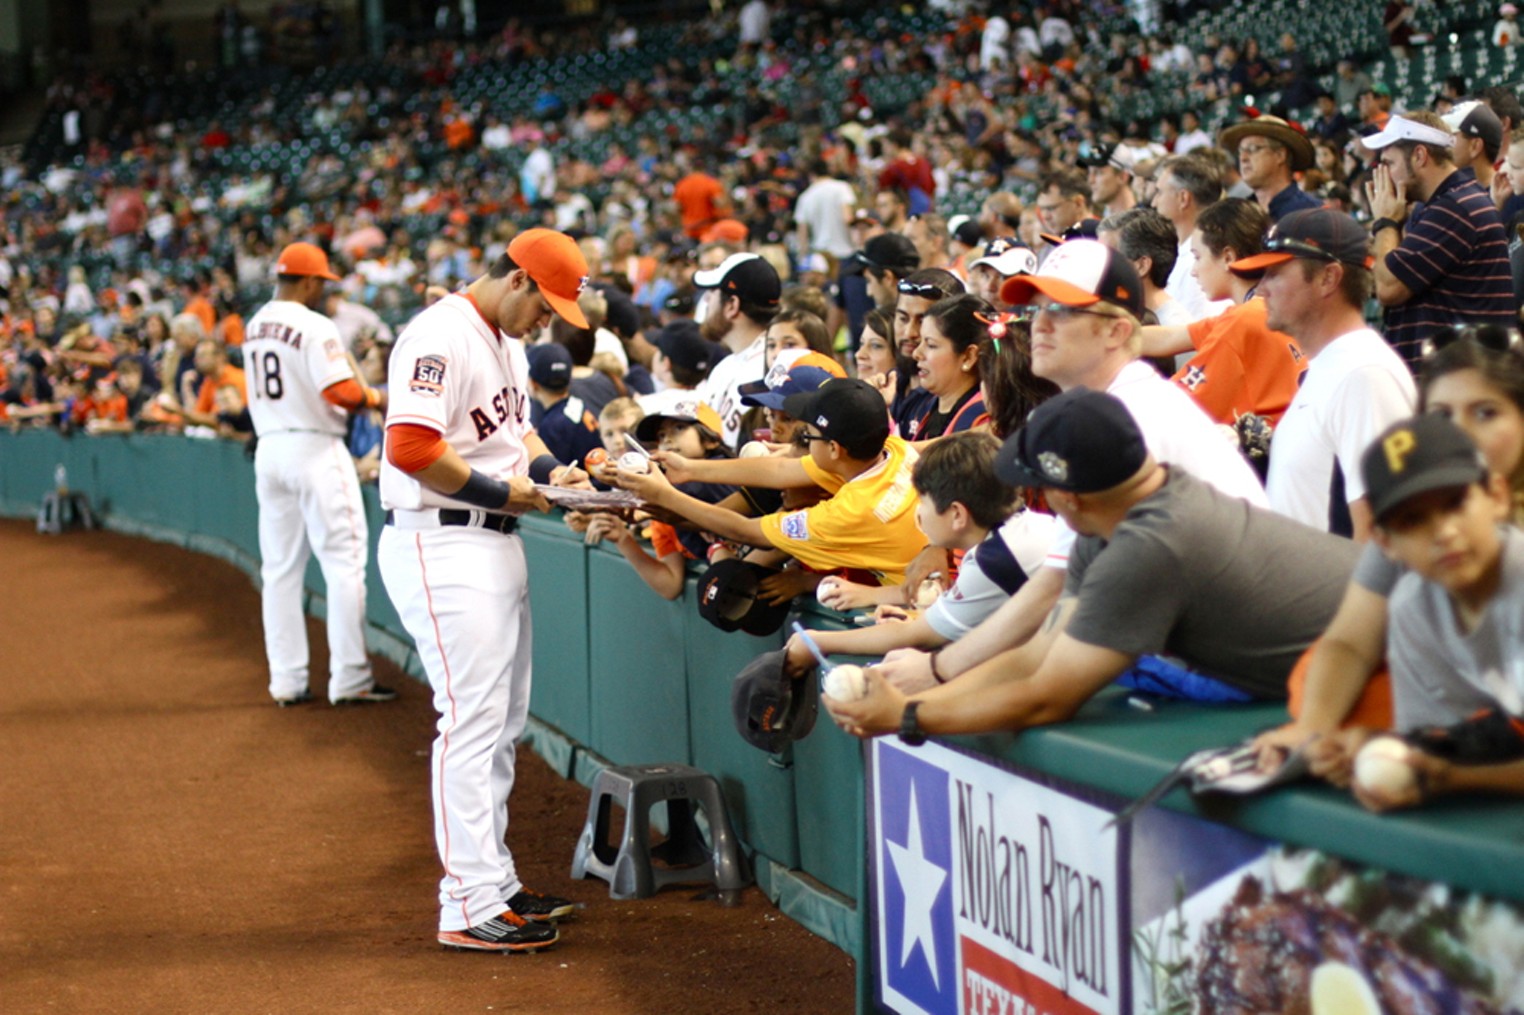 Houston Astros mascot Orbit promotes his birthday during BP 